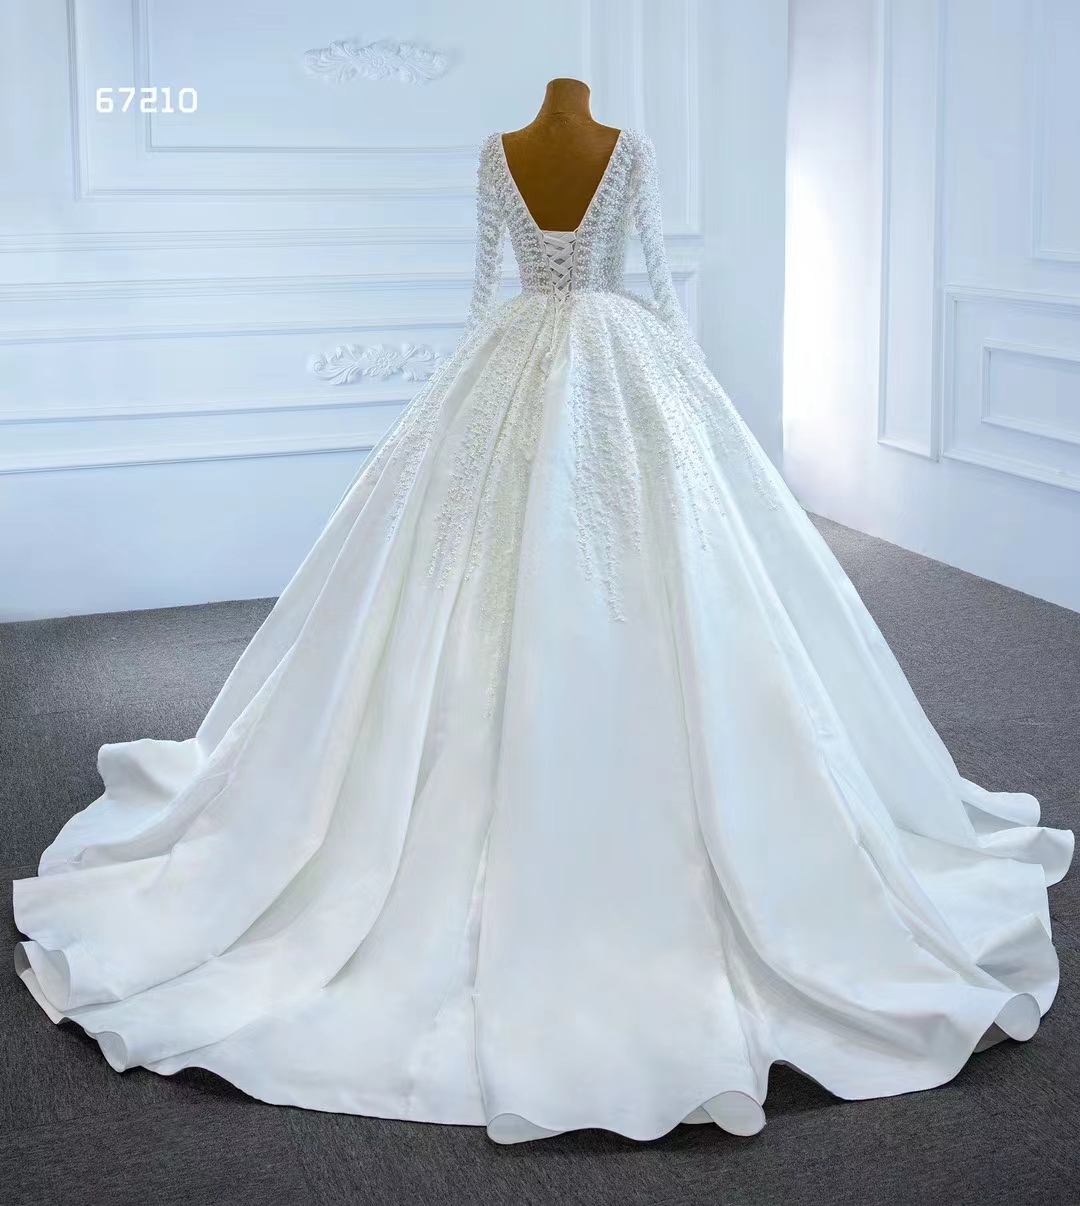 Luxury Satin Embellished Pearl White Wedding Dress Bridal Long Sleeve Women's Dress SM67210